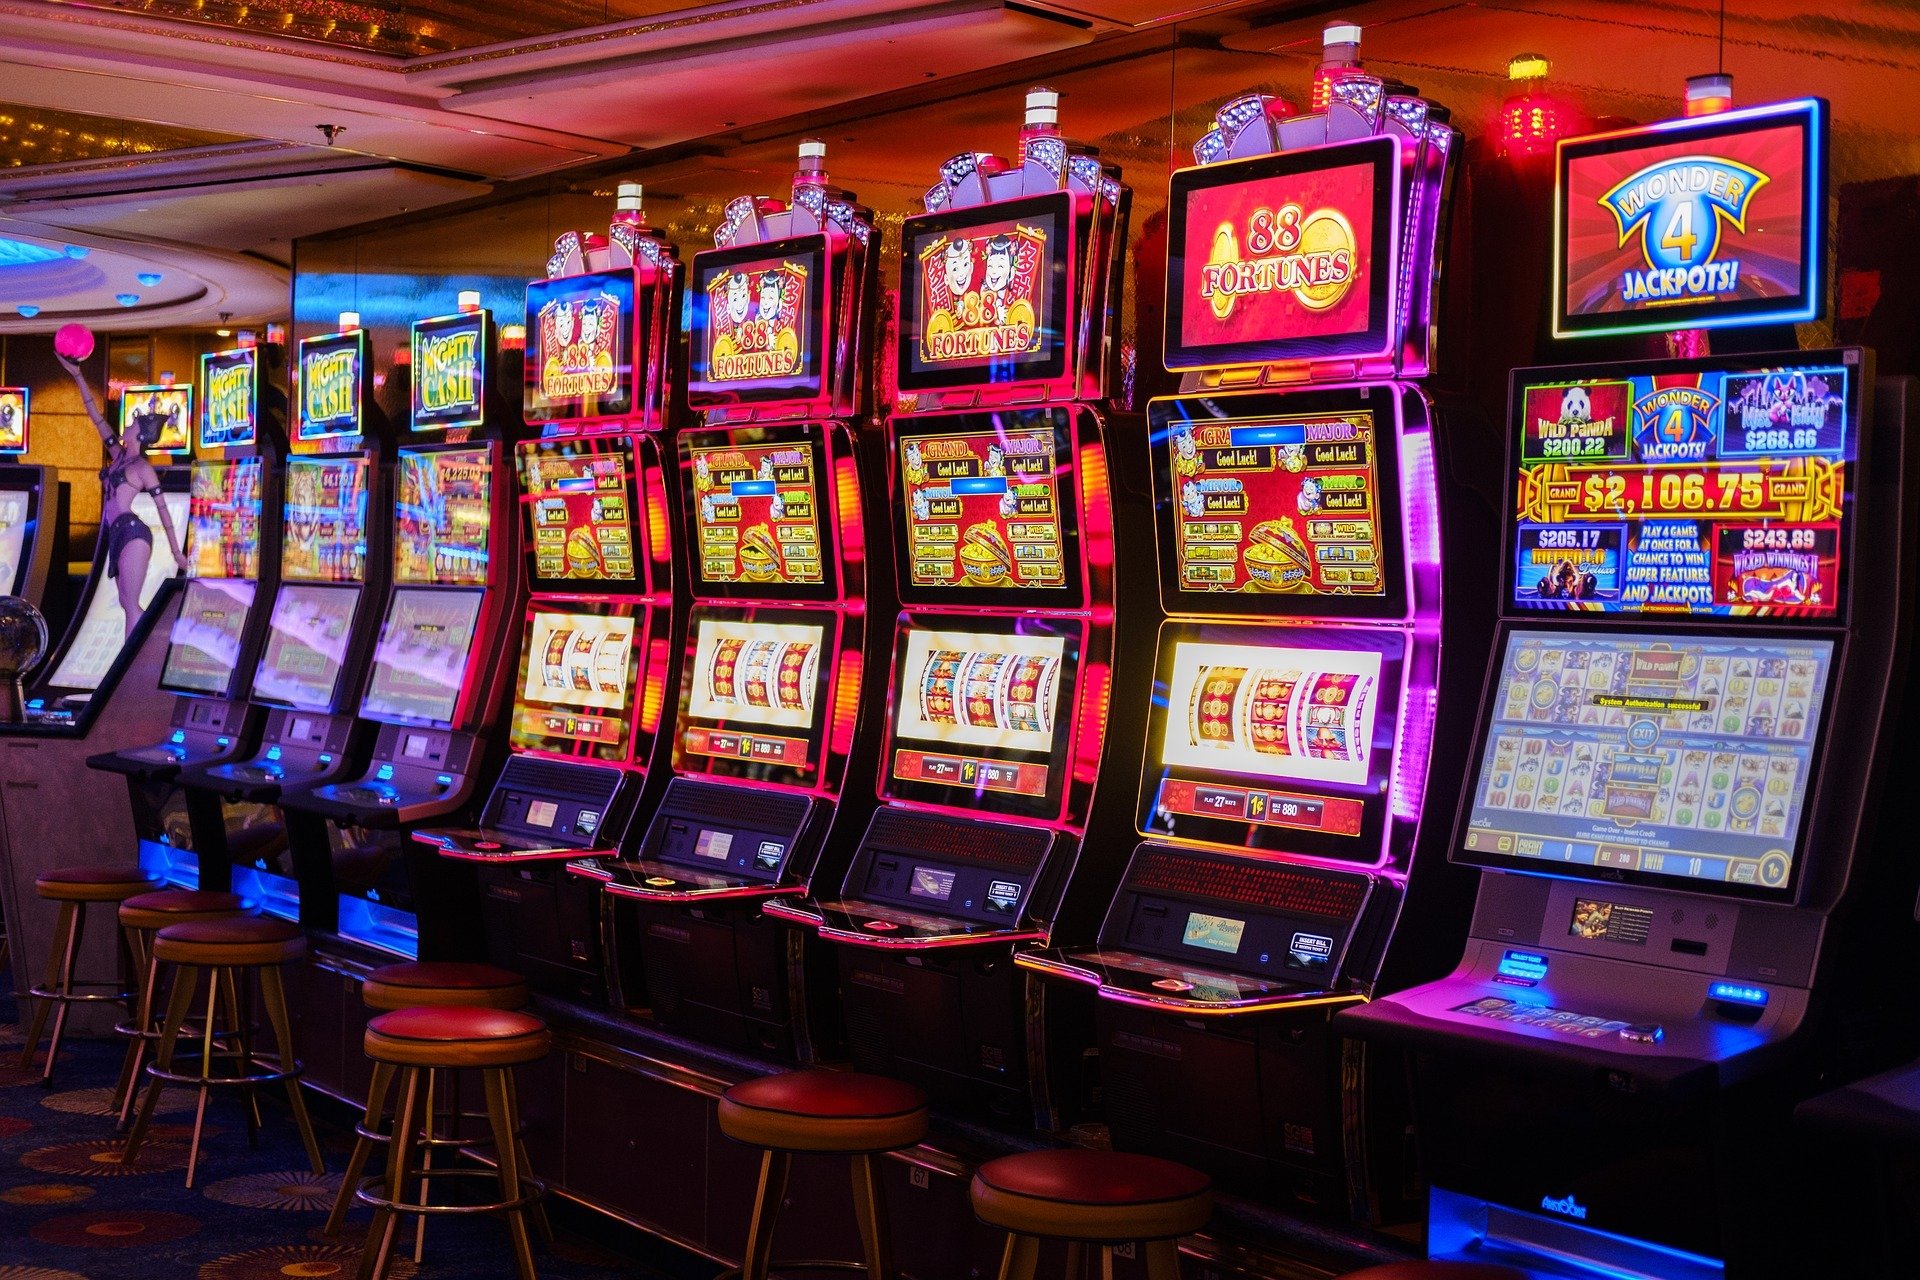 Are Casino Slots Fraud?